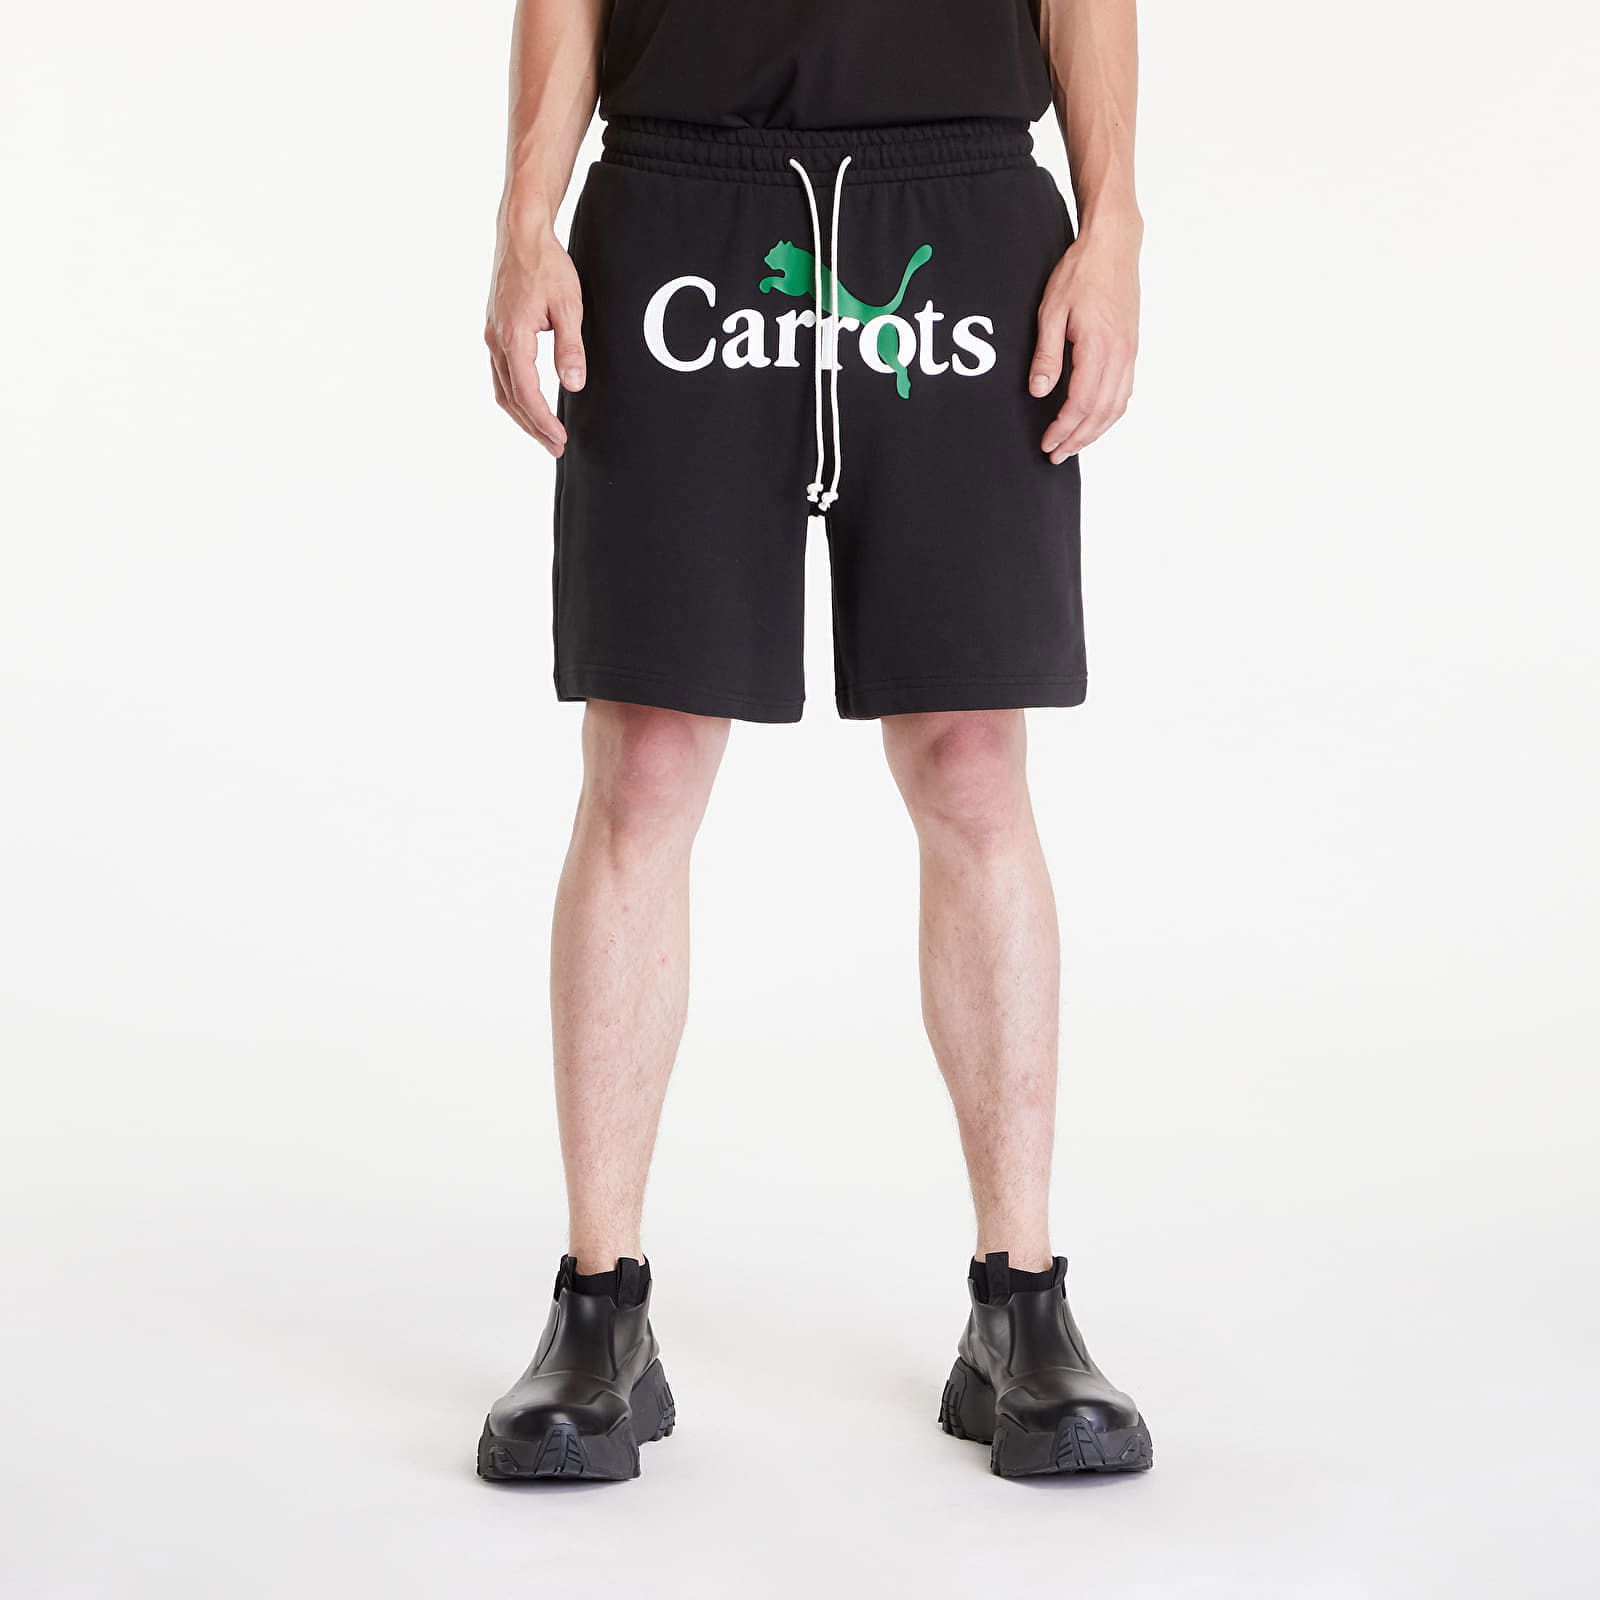 Carrots x Shorts Black